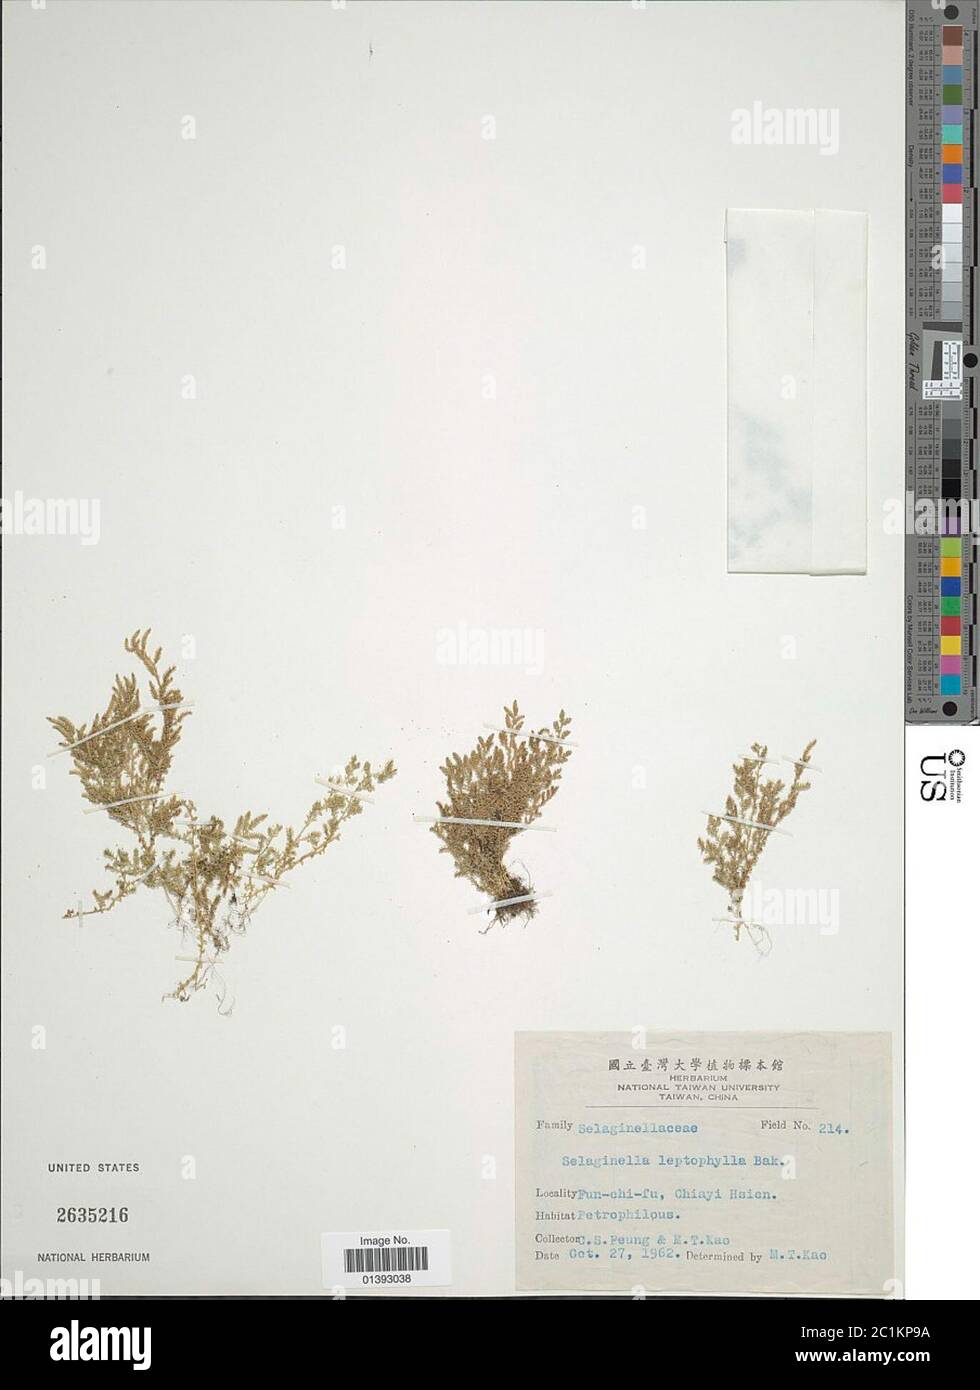 Selaginella leptophylla Baker Stock Photo